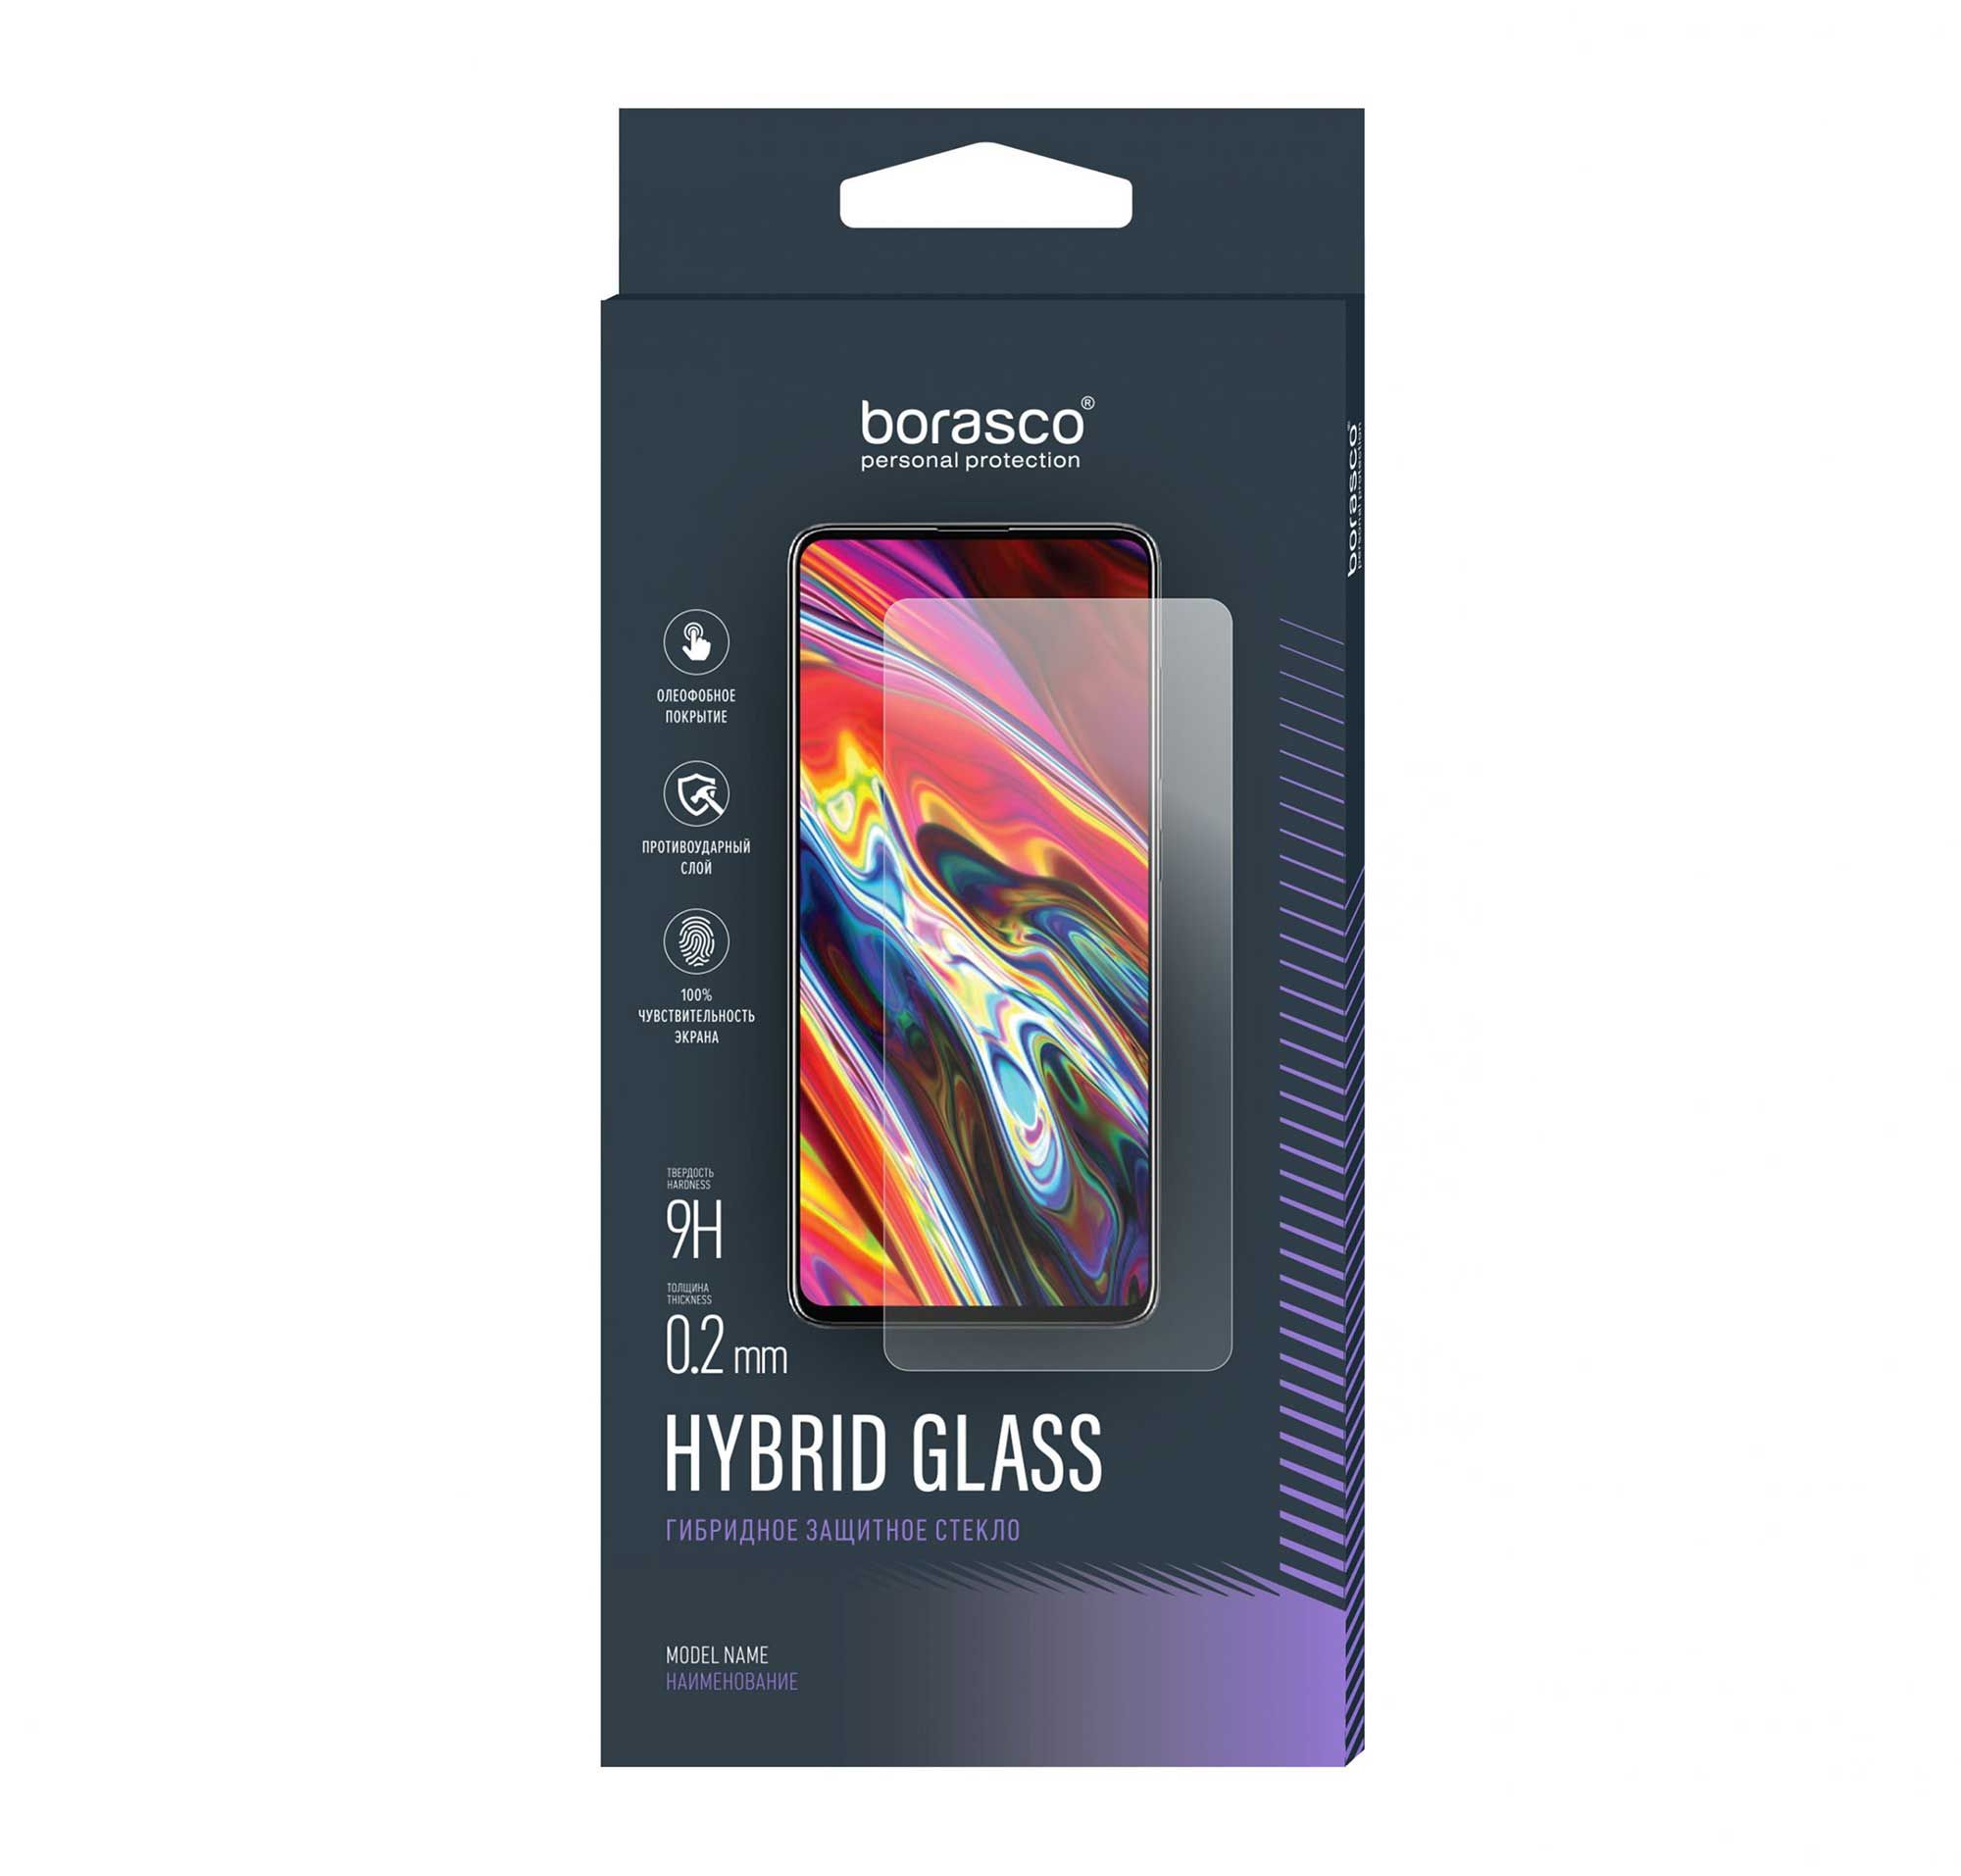 Защитное стекло Hybrid Glass для UMIDIGI BISON 2 защитное стекло для экрана oukitel bison 2021 f150 bison 2021 b2021 2 шт